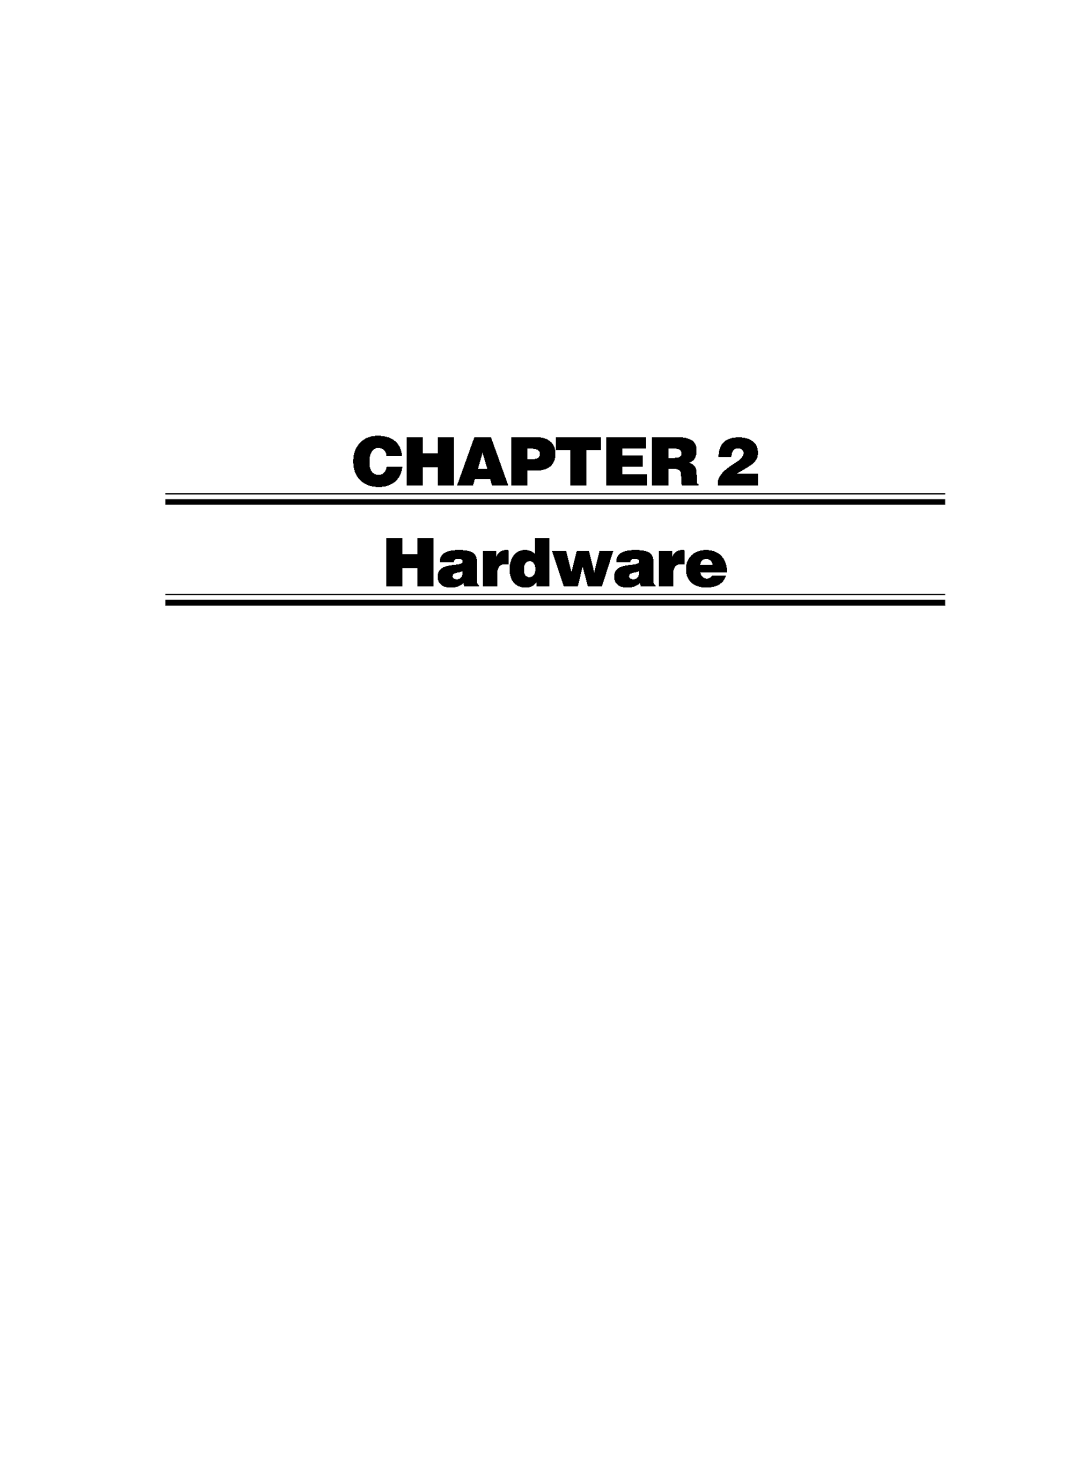 Fujitsu 500 user manual CHAPTER Hardware 